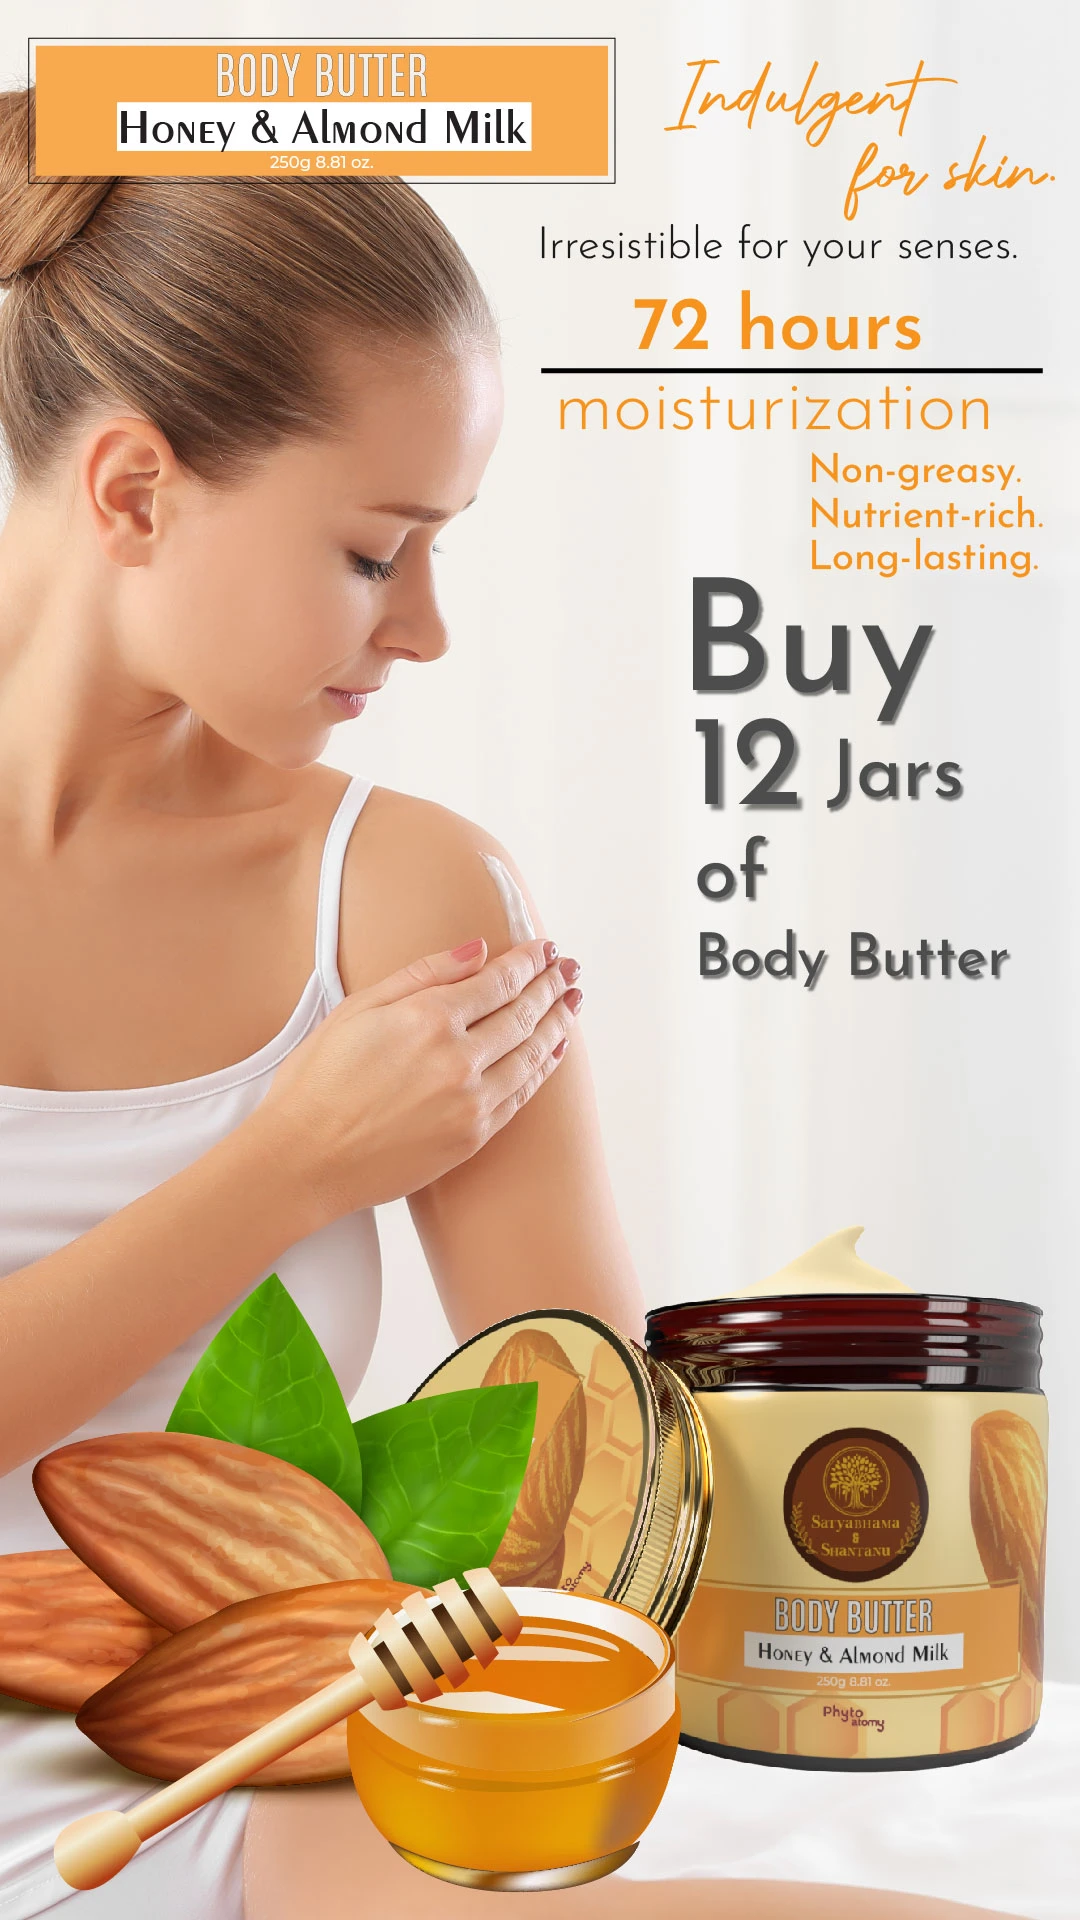 RBV B2B Honey & Almond Milk Body Butter (250g)-12 Pcs.